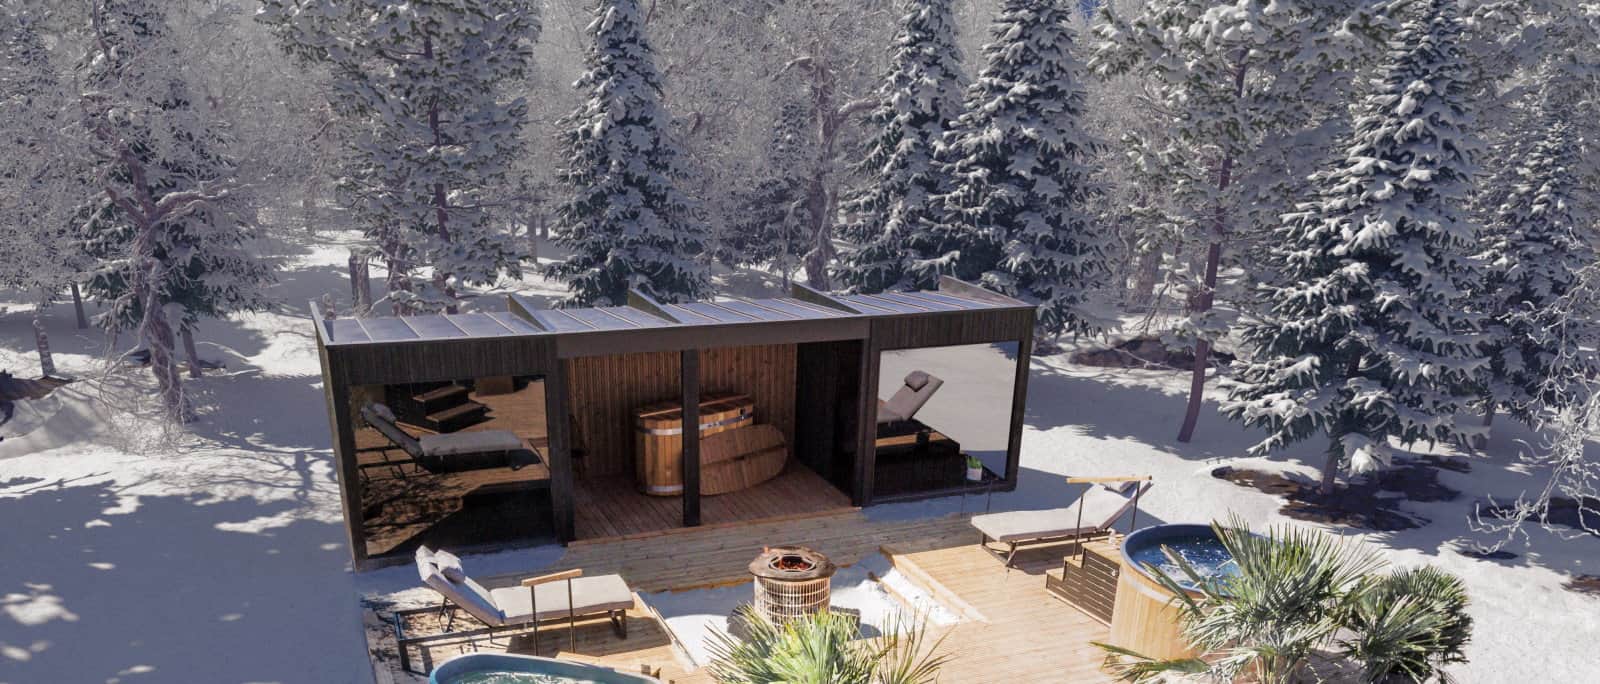 Kirami FinVision Sauna Nordic Misty - Annex System im Winter